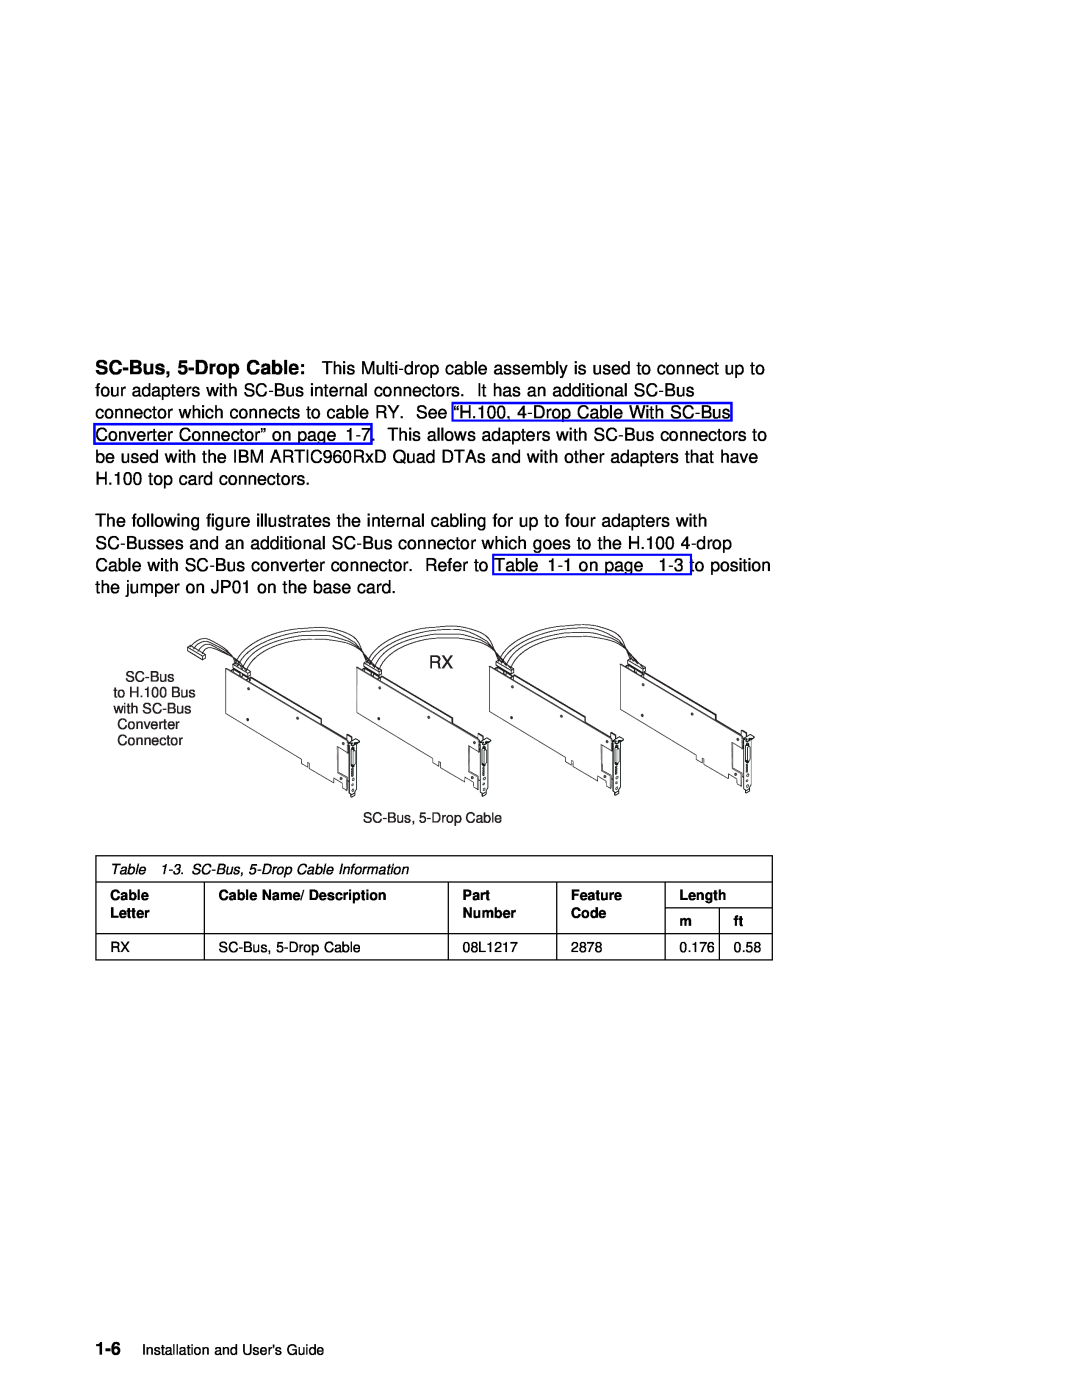 IBM ARTIC960RxD manual Cable, SC-Bus, 5-Drop, Part, Feature, Code 